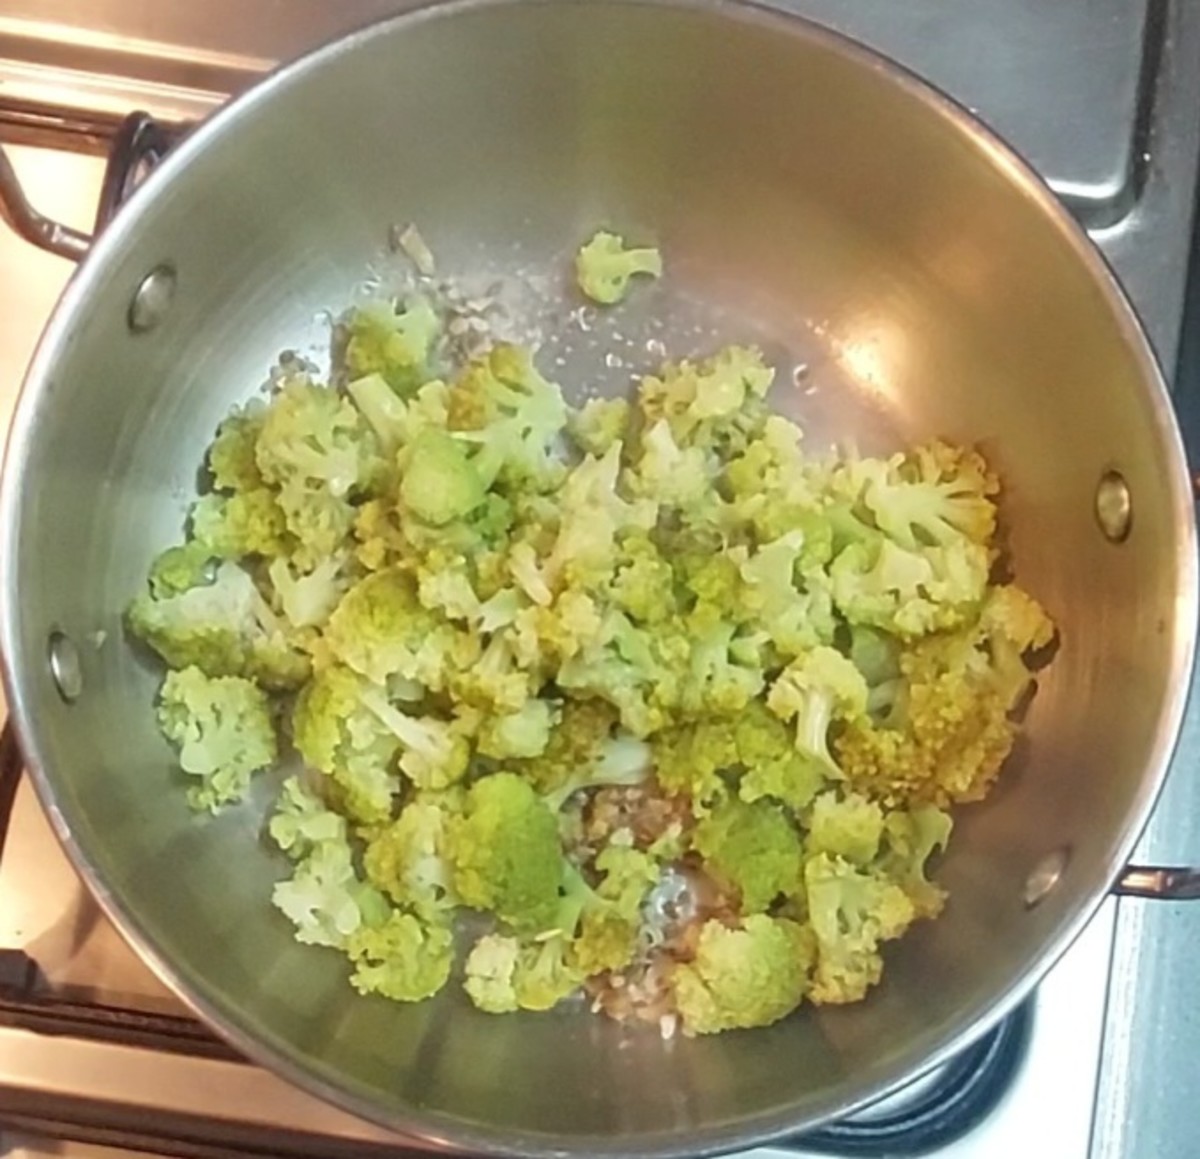 Add broccoli, mix well with the seasoning. Add salt to taste